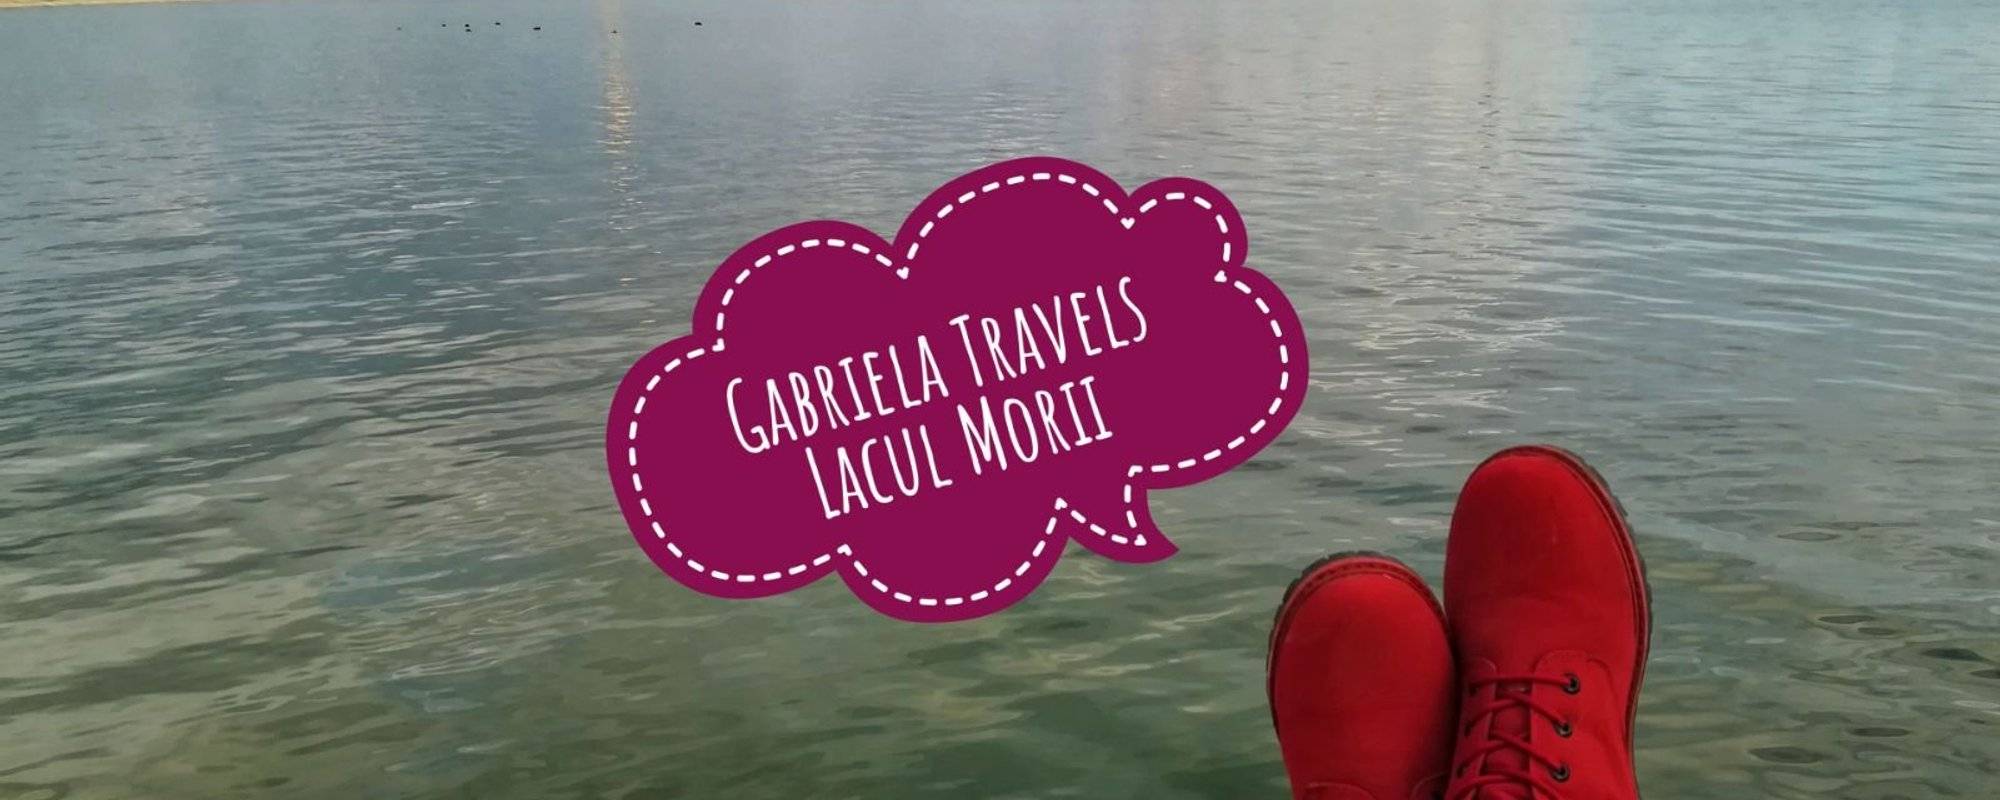 Let's travel together #64 - Morii's Lake (Lacul Morii)